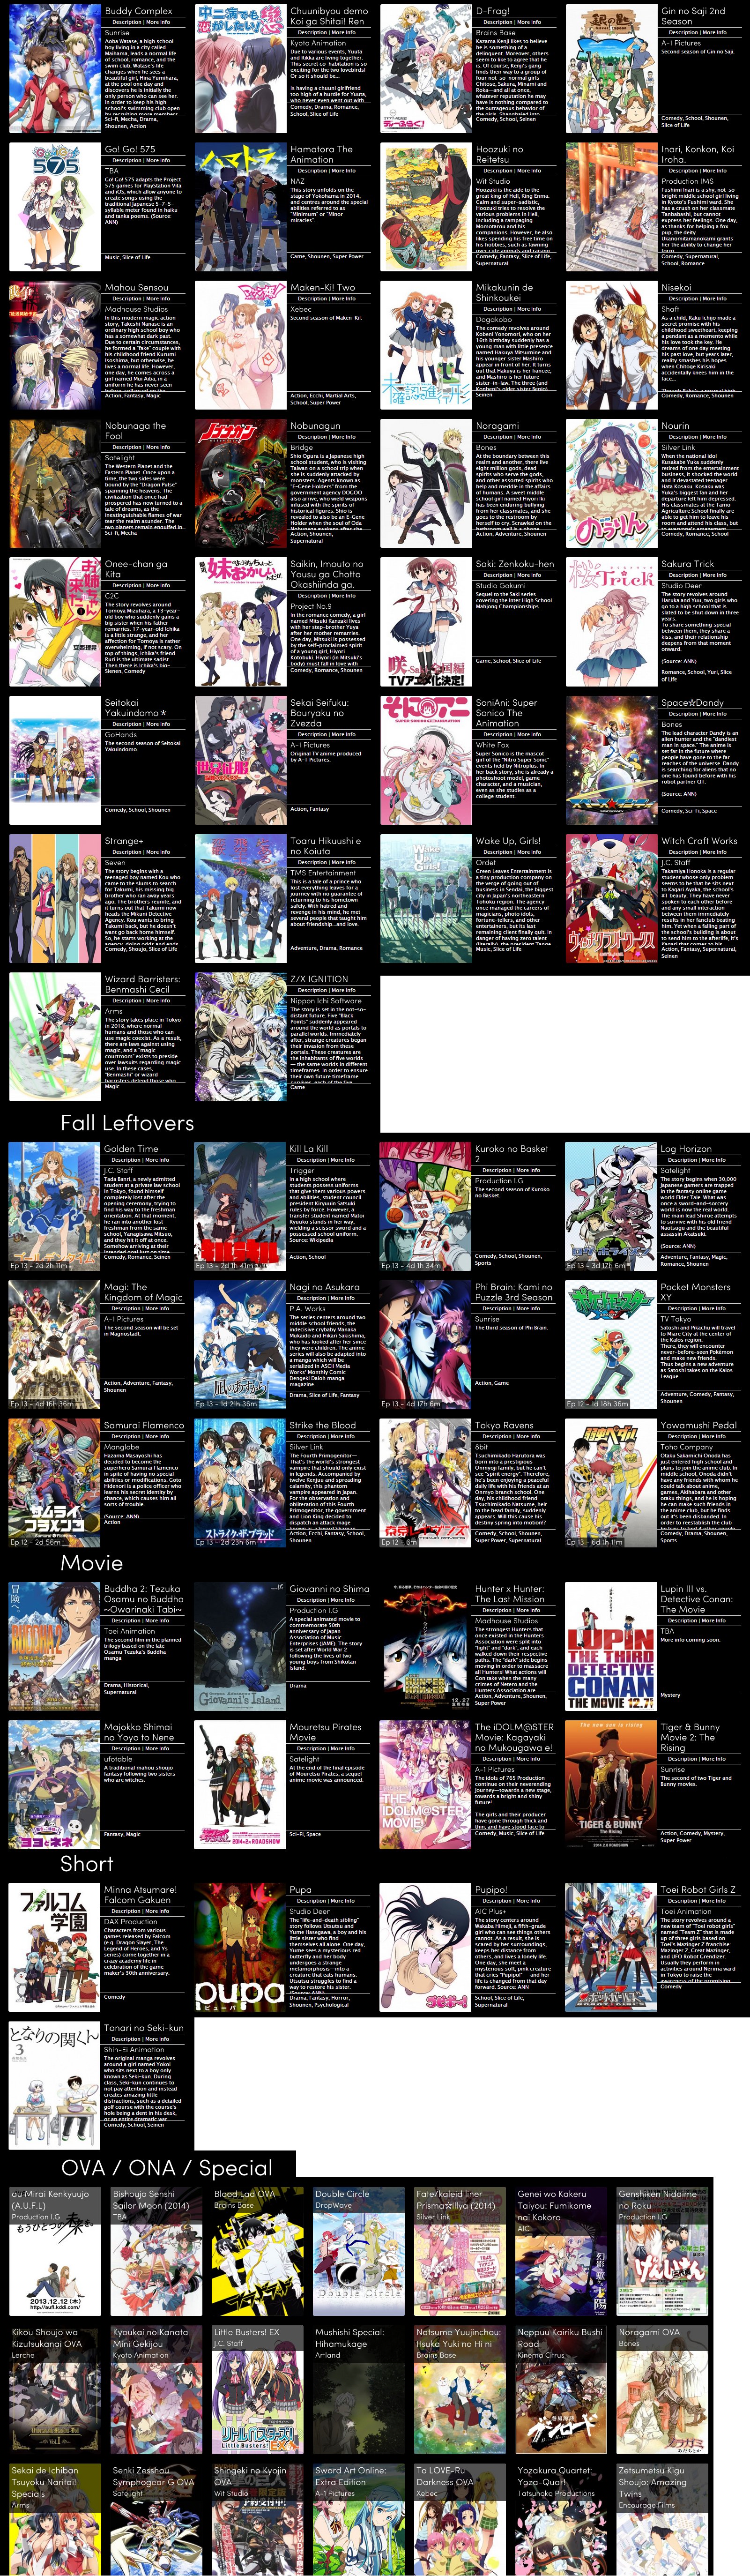 Anime Chart Winter 2013-14